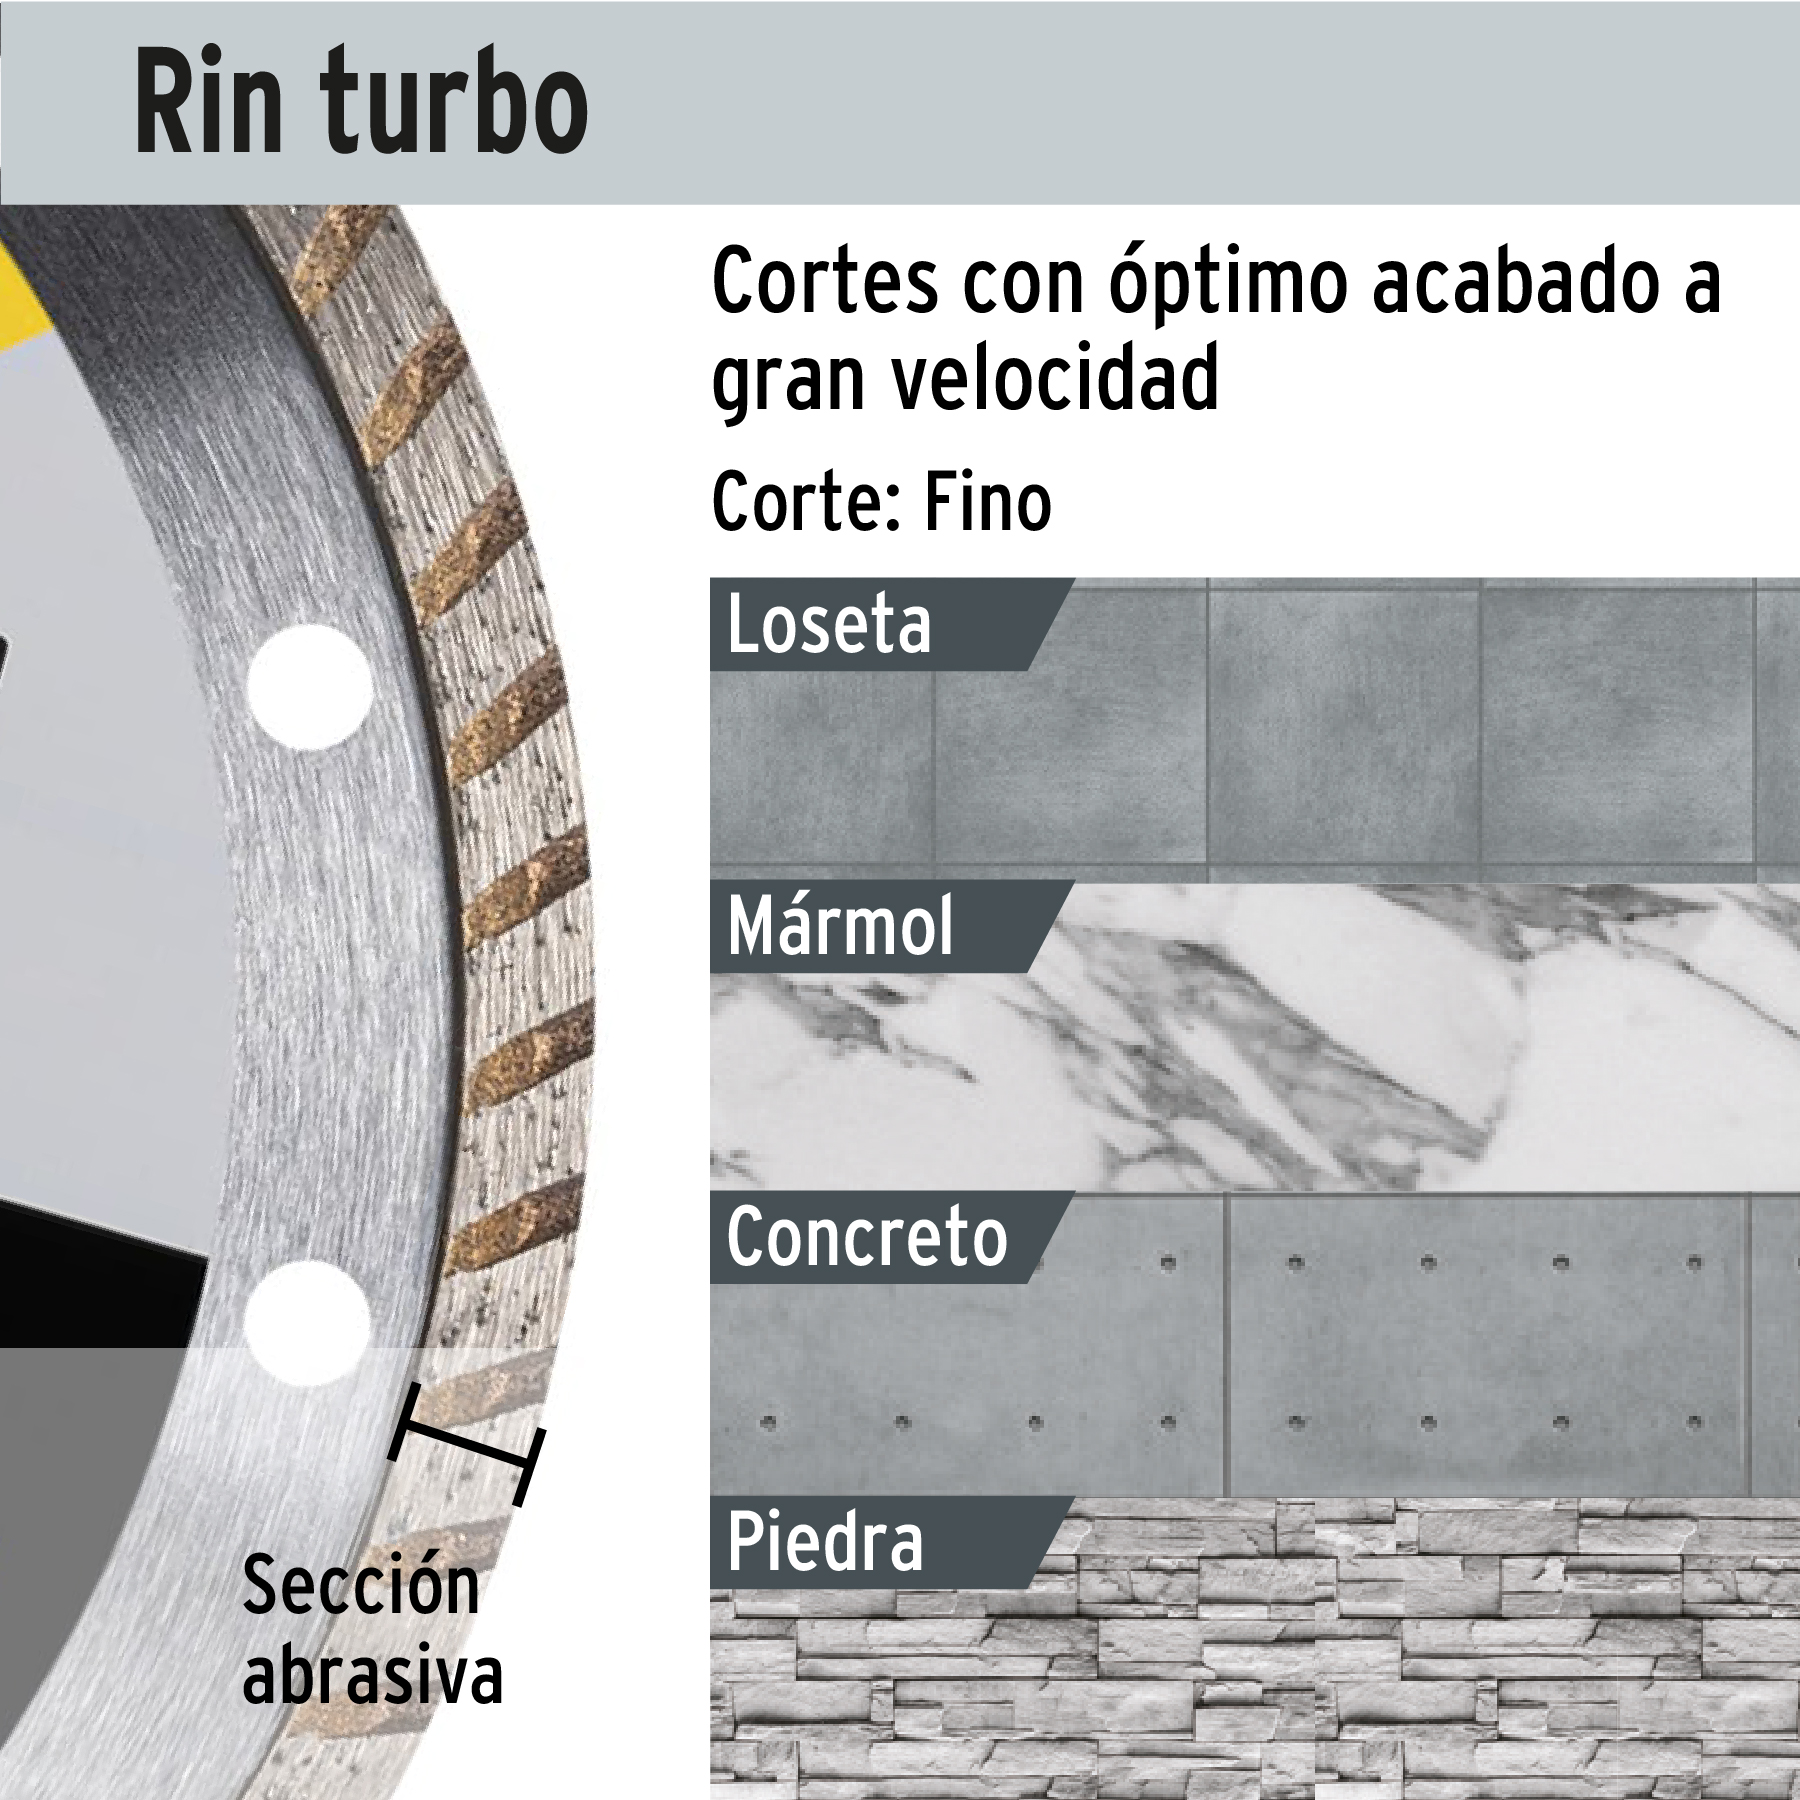 Disco de Diamante para Concreto Astra Turbo Mussol - Ferretería On Line